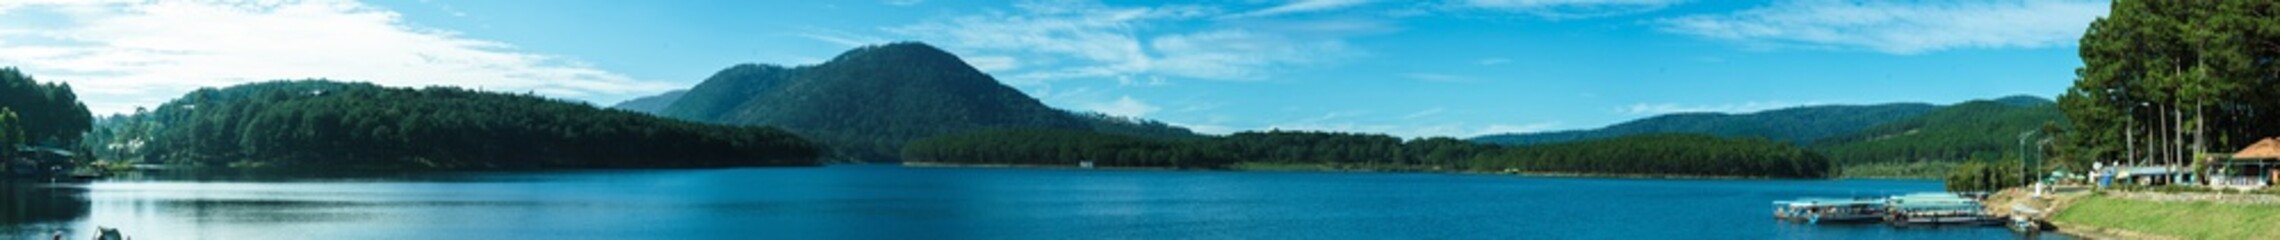 Tuyen Lam Lake - Panorama